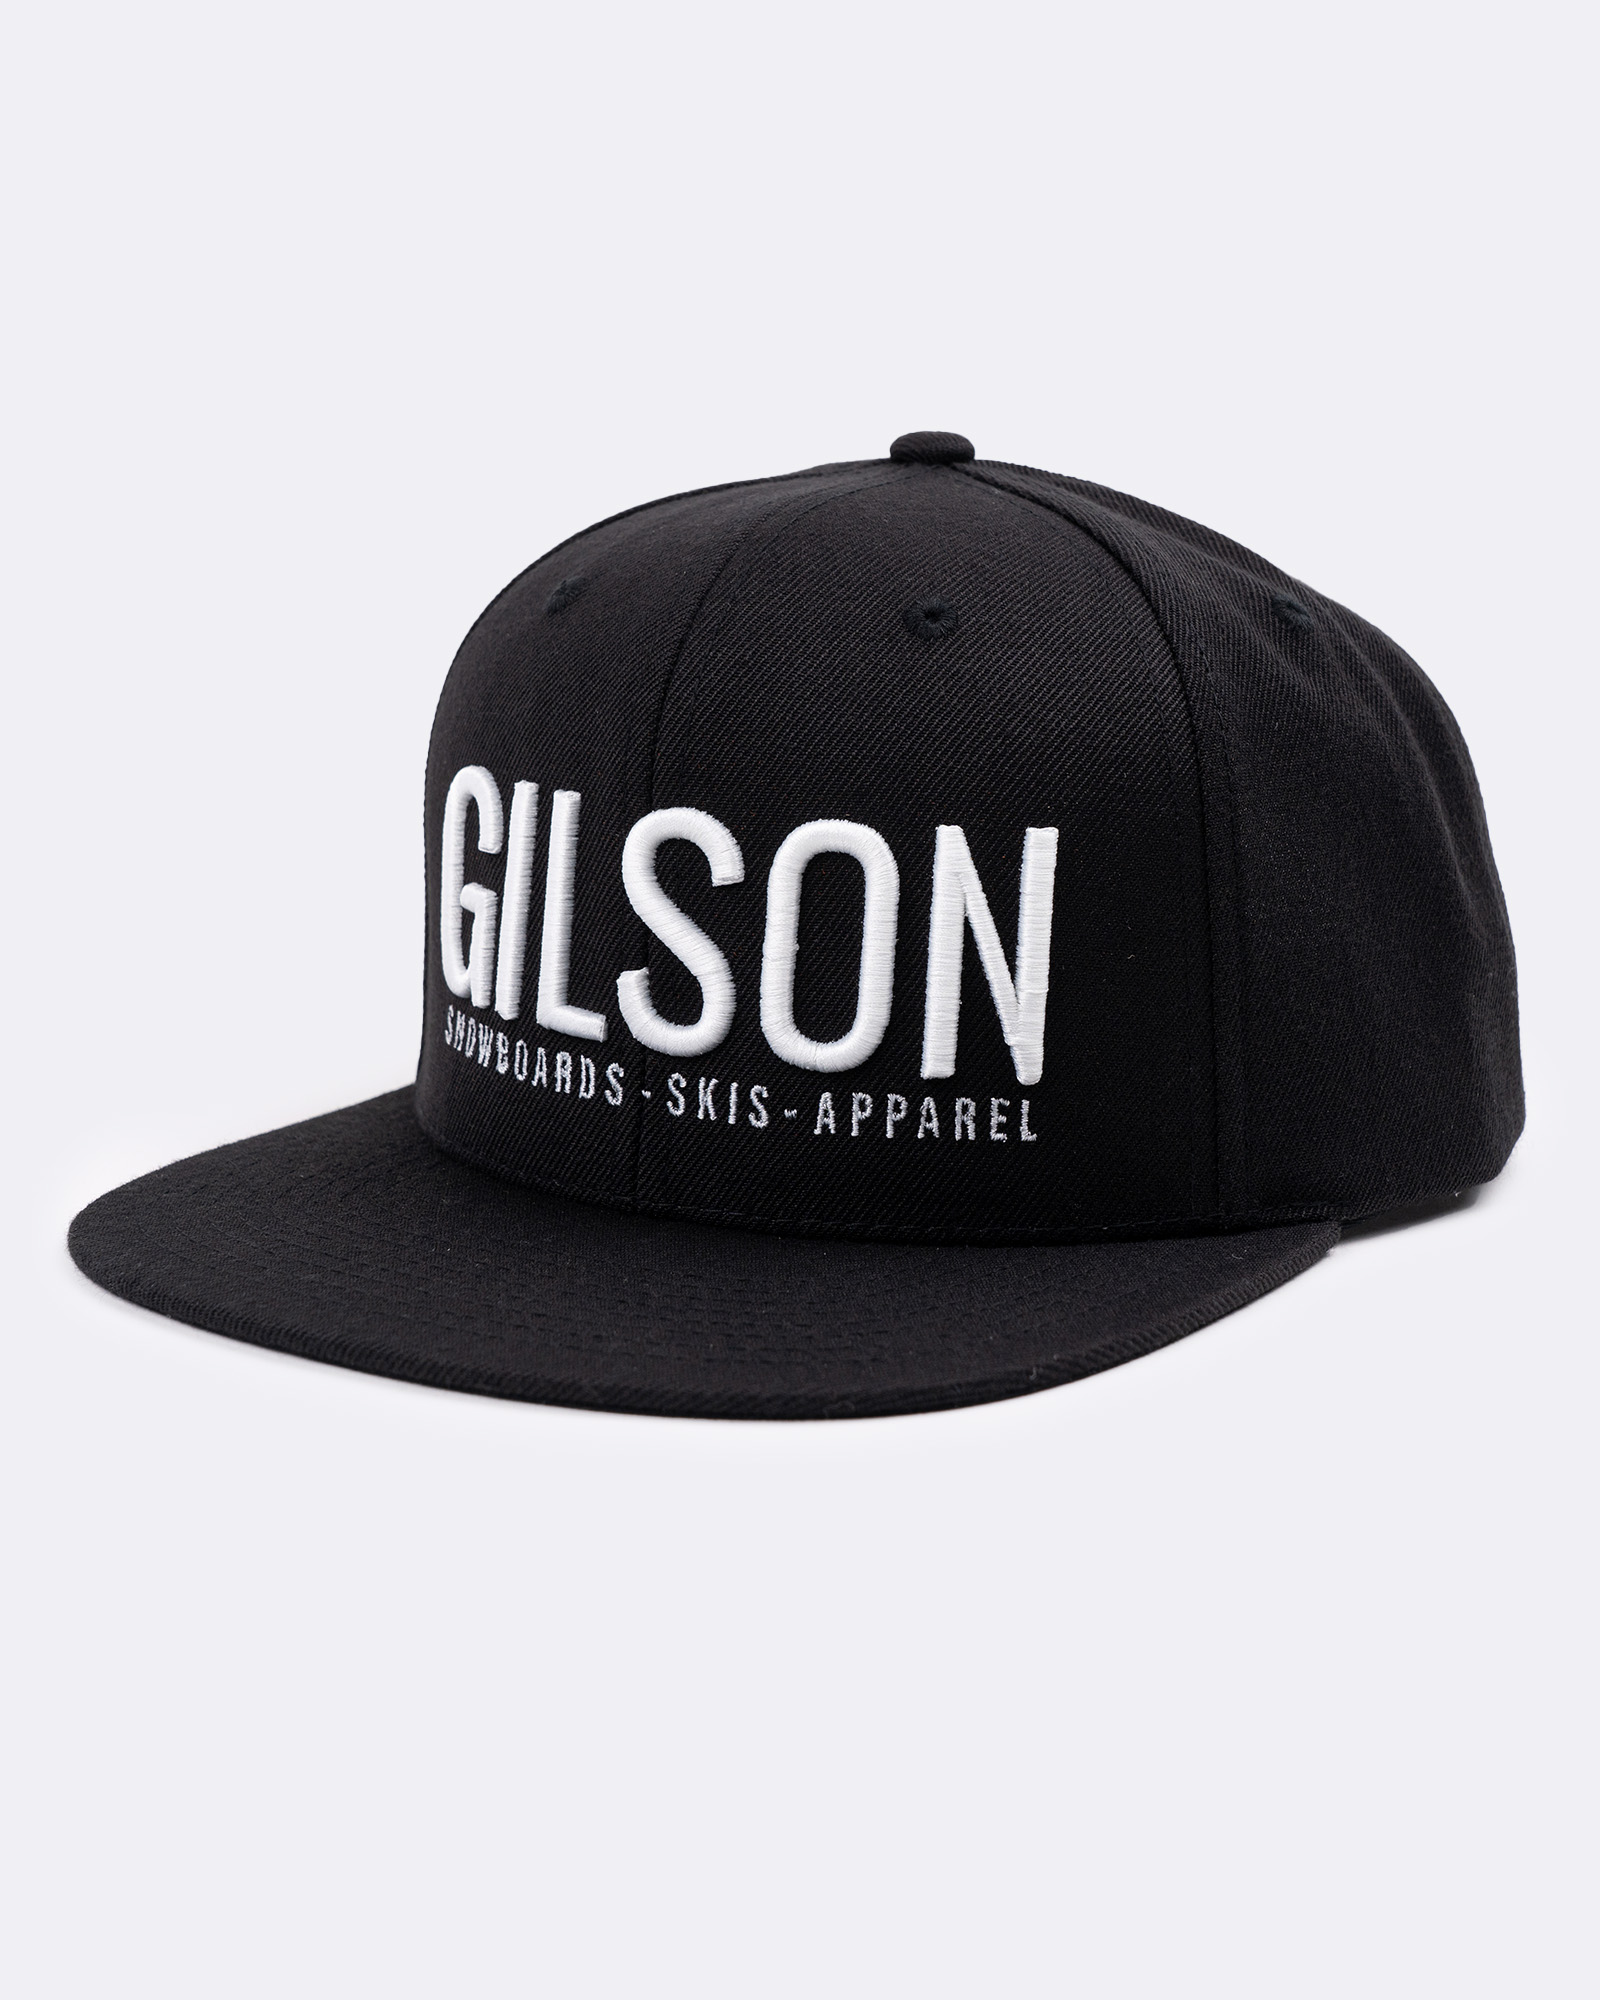 Gilson Flat Brim 
Snapback Black graphics